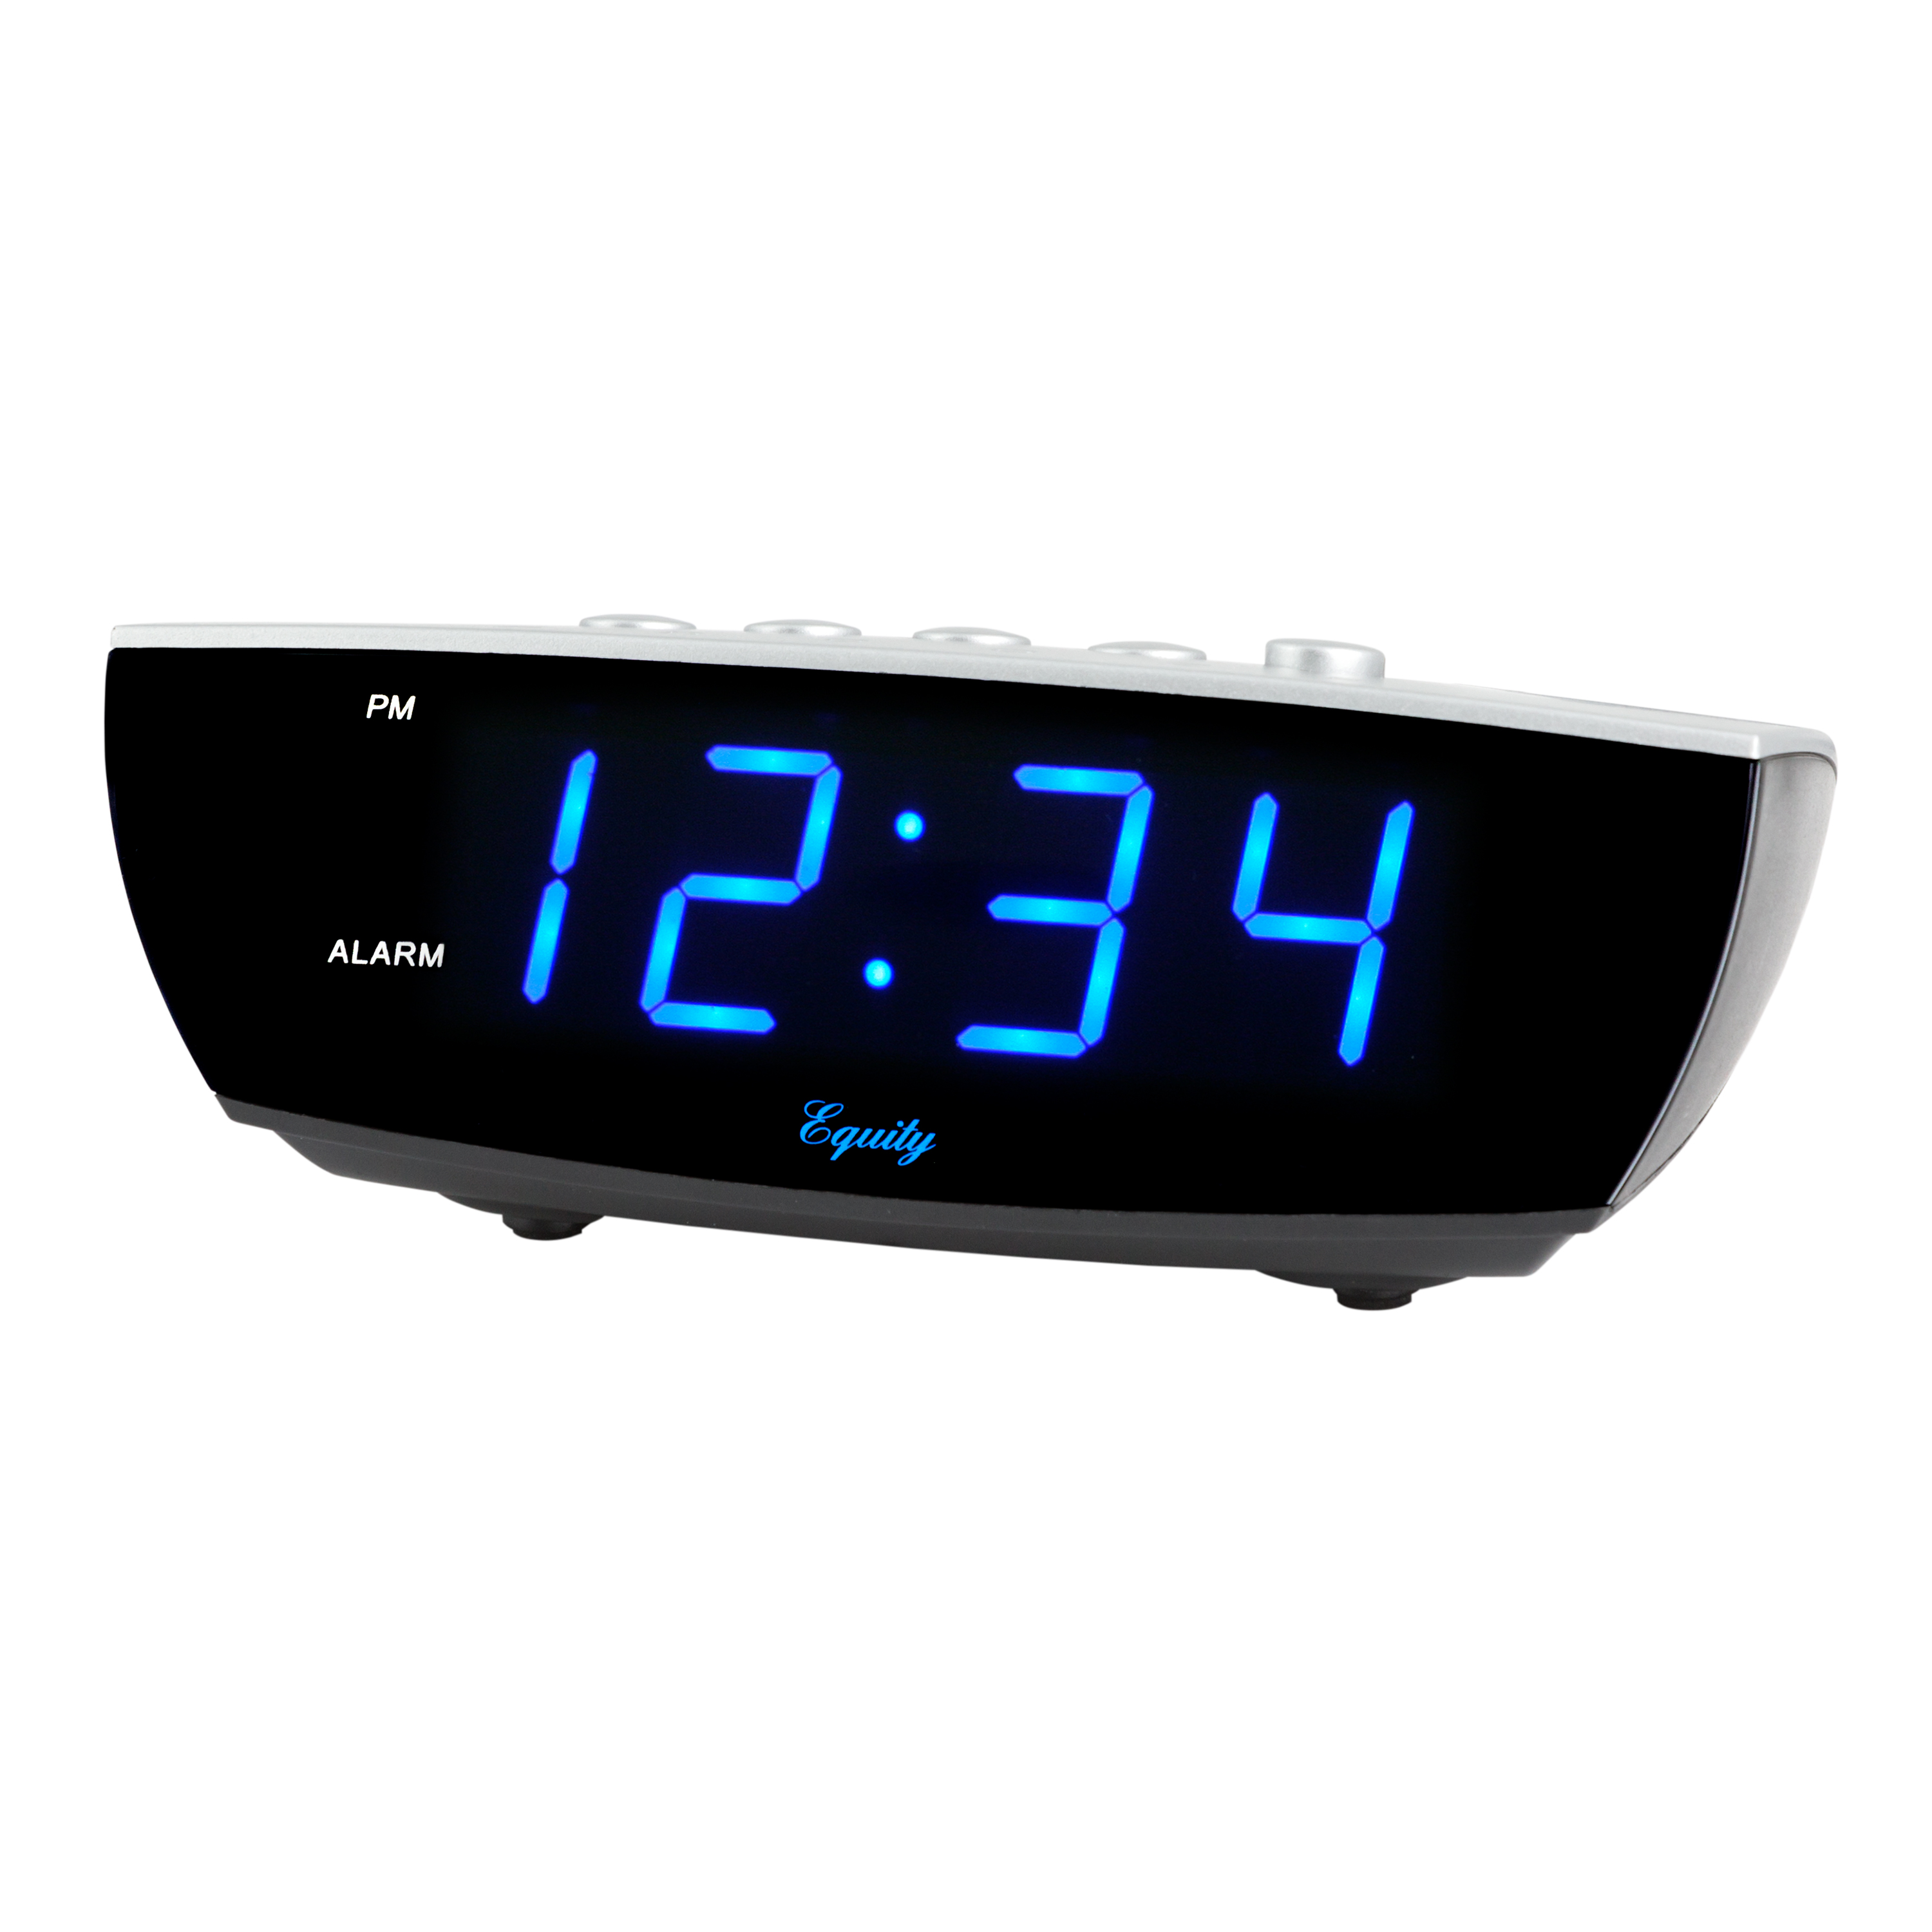 Equity by La Crosse 75903 0.9" Blue LED Digital Desktop Alarm Clock - image 3 of 5